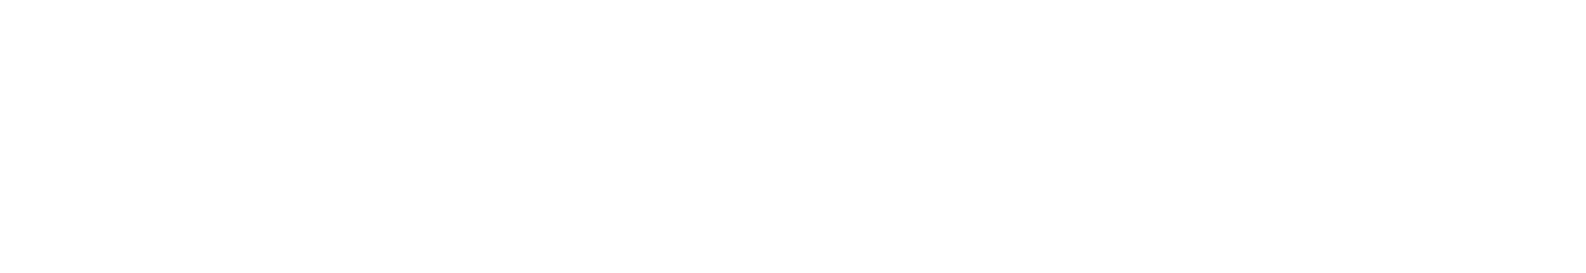 WSFS Financial logo large for dark backgrounds (transparent PNG)